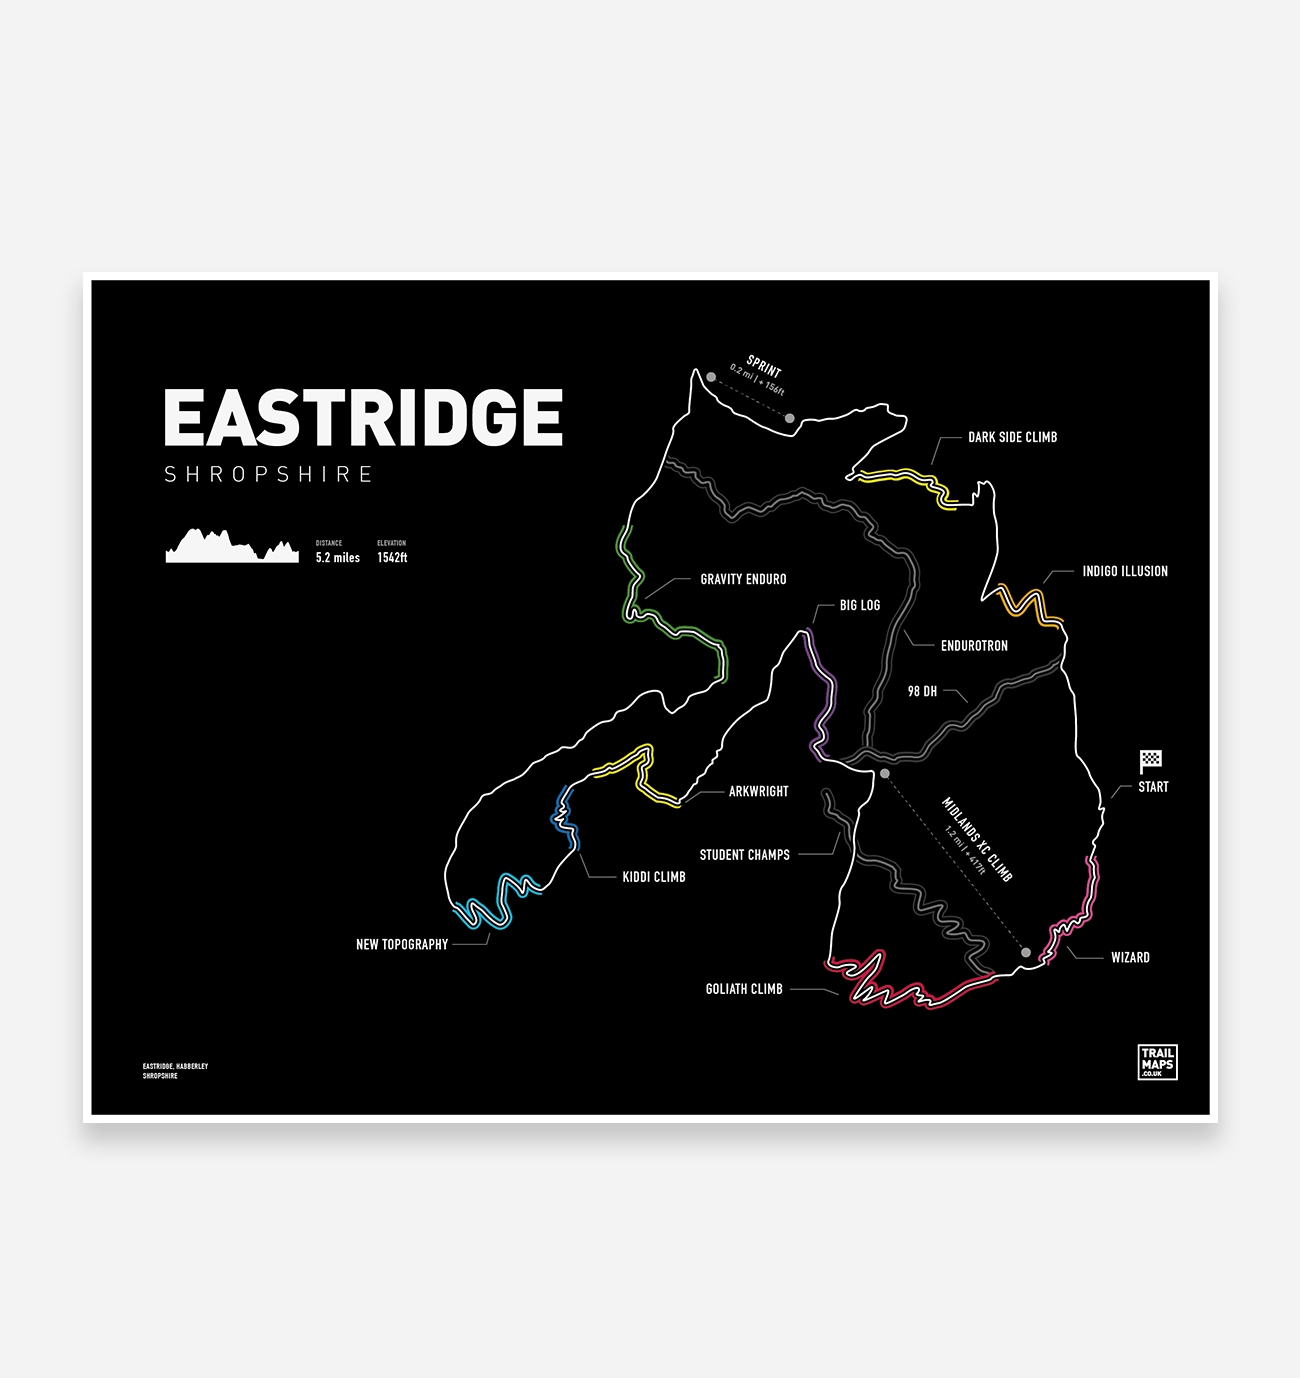 Eastridge Trail Map Print - TrailMaps.co.uk